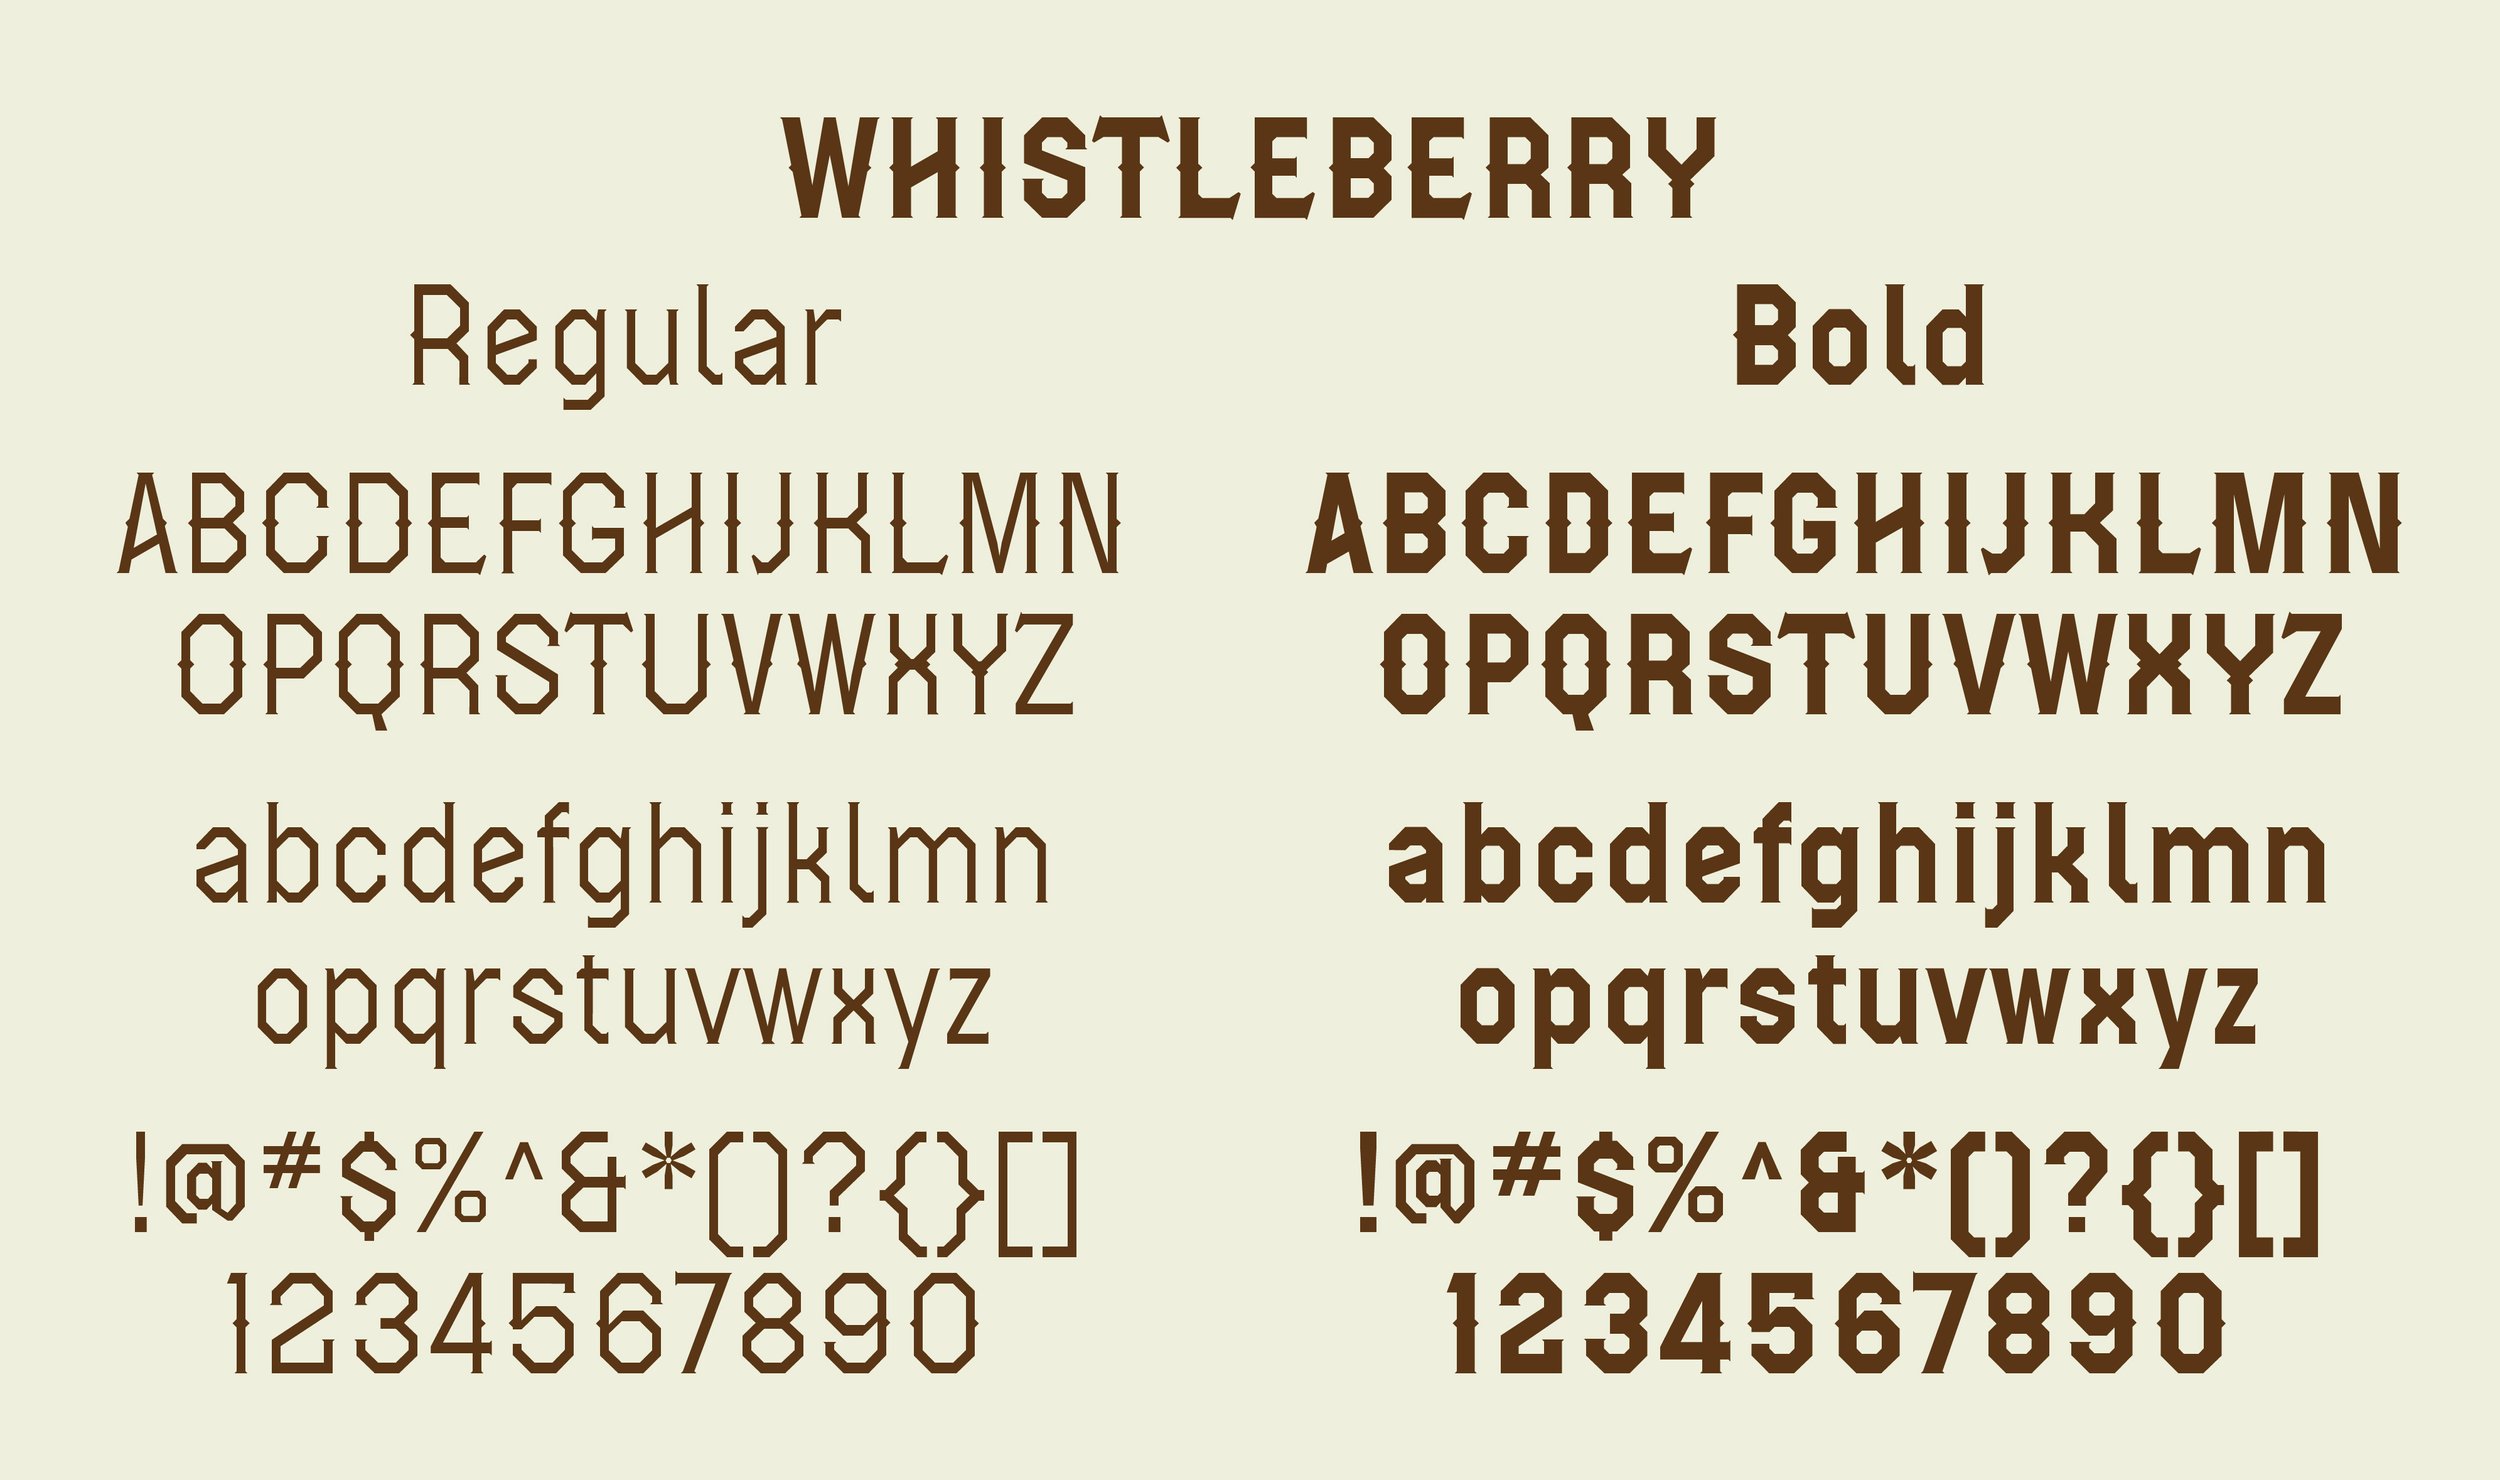 fonts_Whistleberry_Artboard 2.jpg